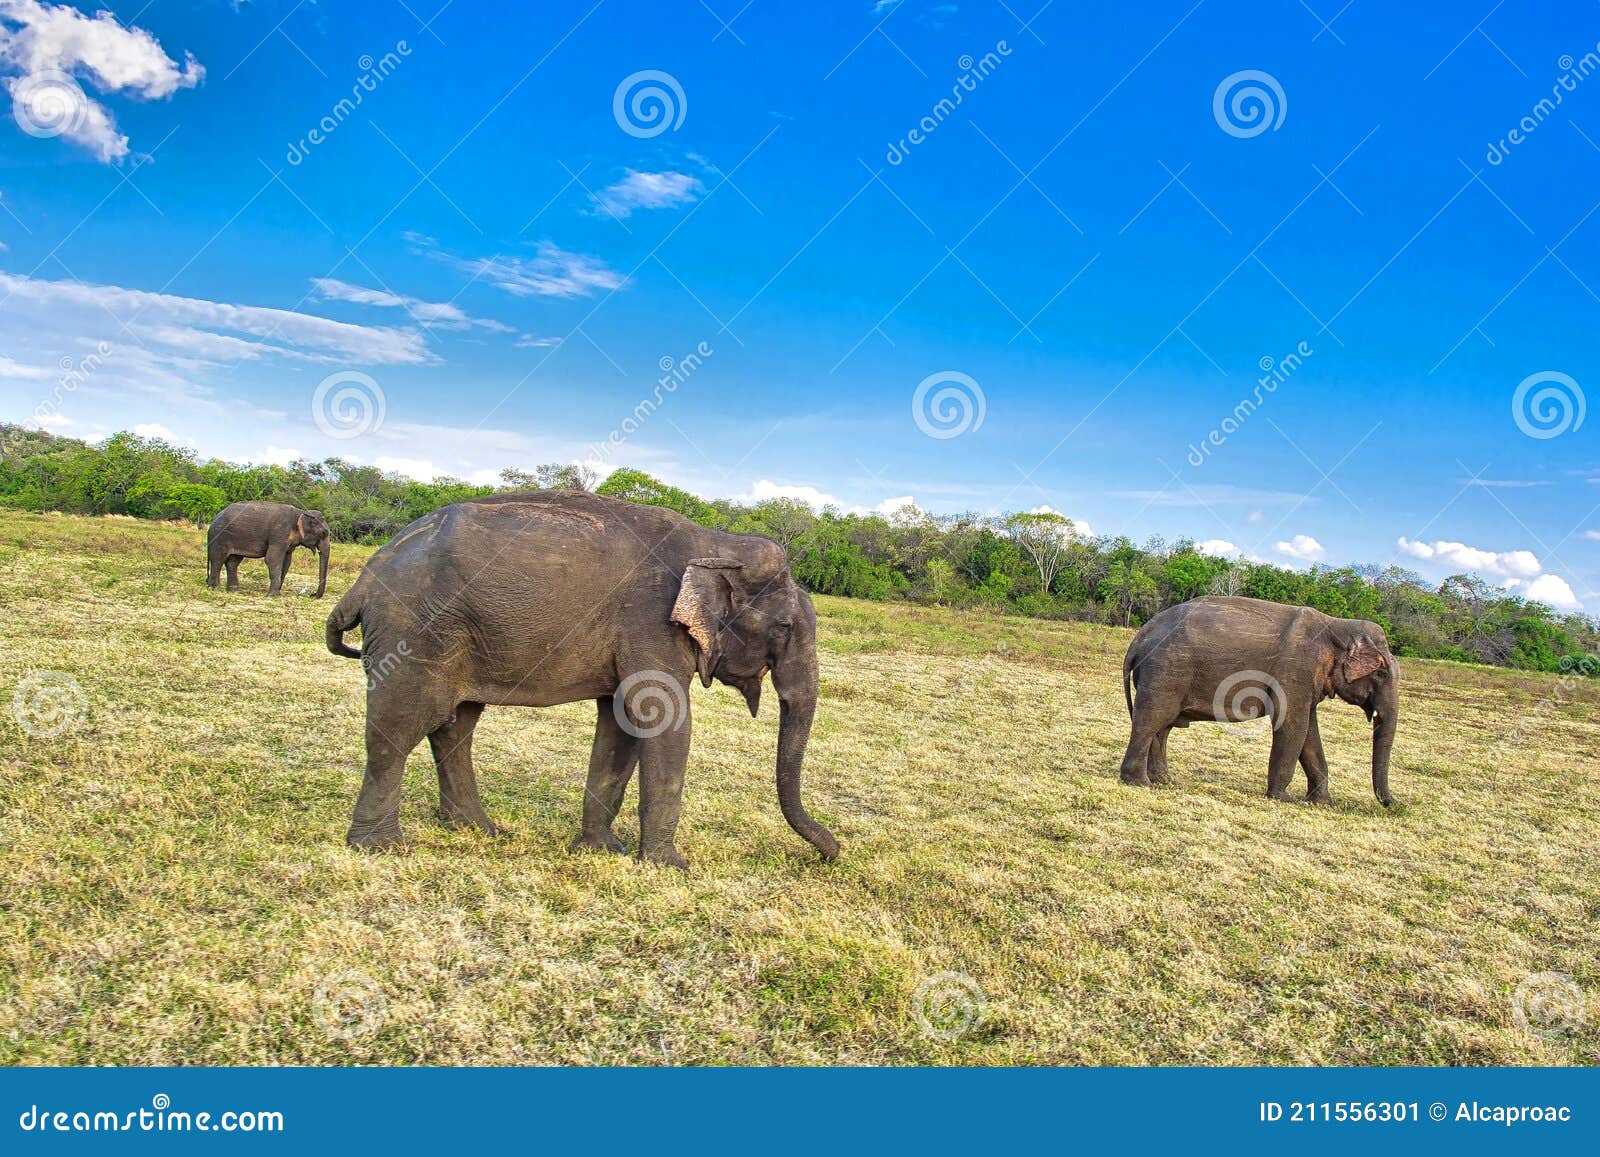 sri lankan elephant, kaudulla national park, sri lanka